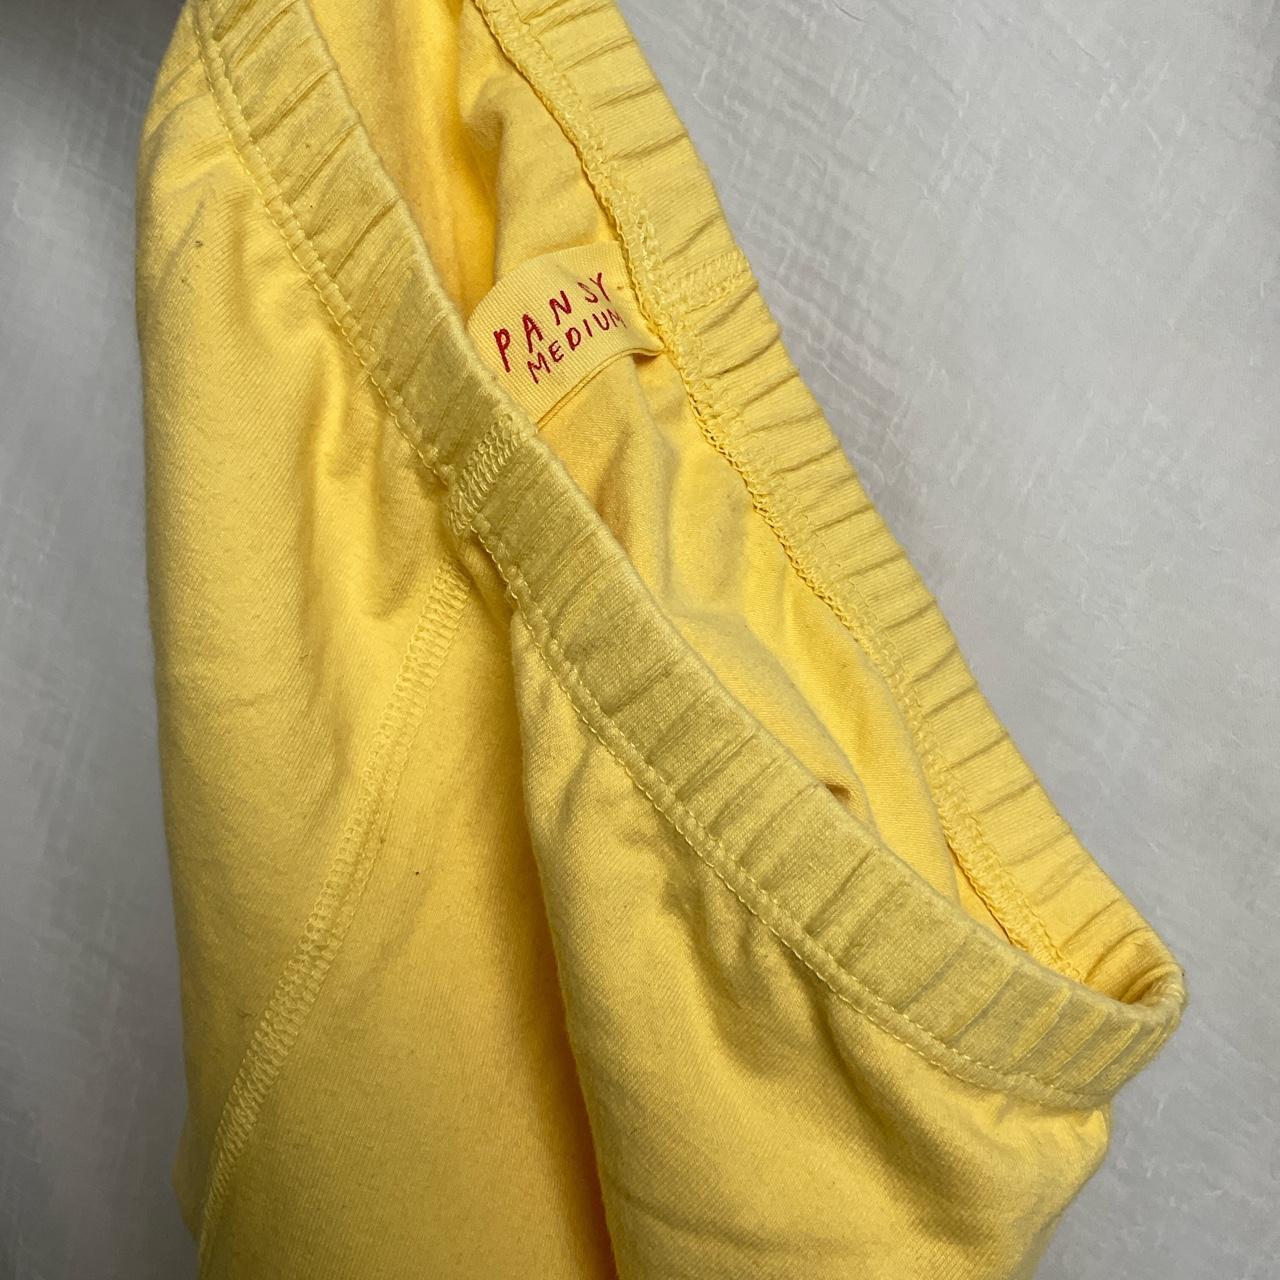 Pansy Women's Yellow Shorts